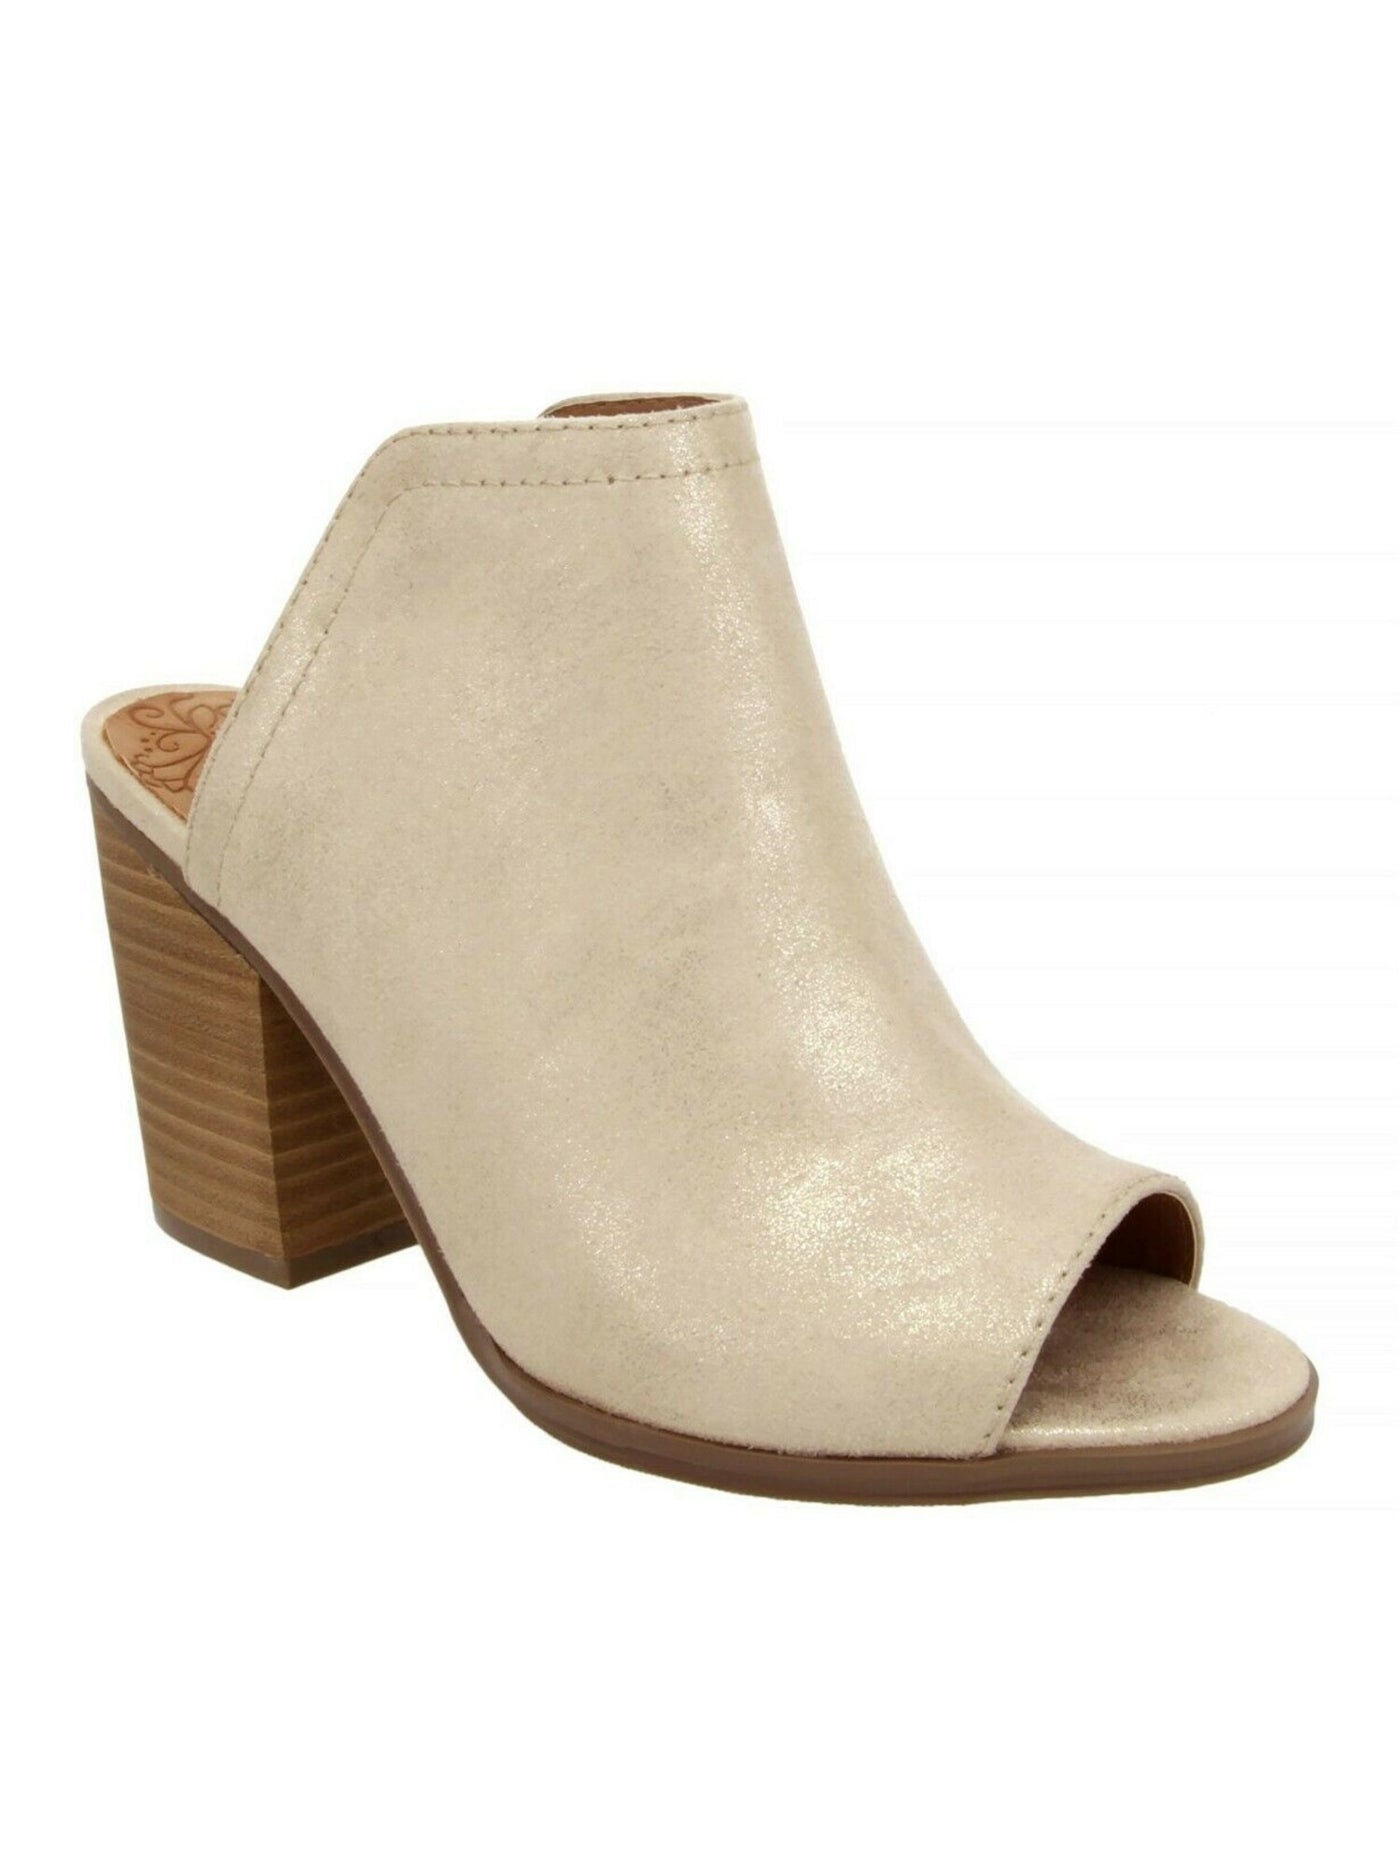 SUGAR Womens Beige Metallic Peppermint Peep Toe Block Heel Slip On Dress Heeled Mules Shoes 8.5